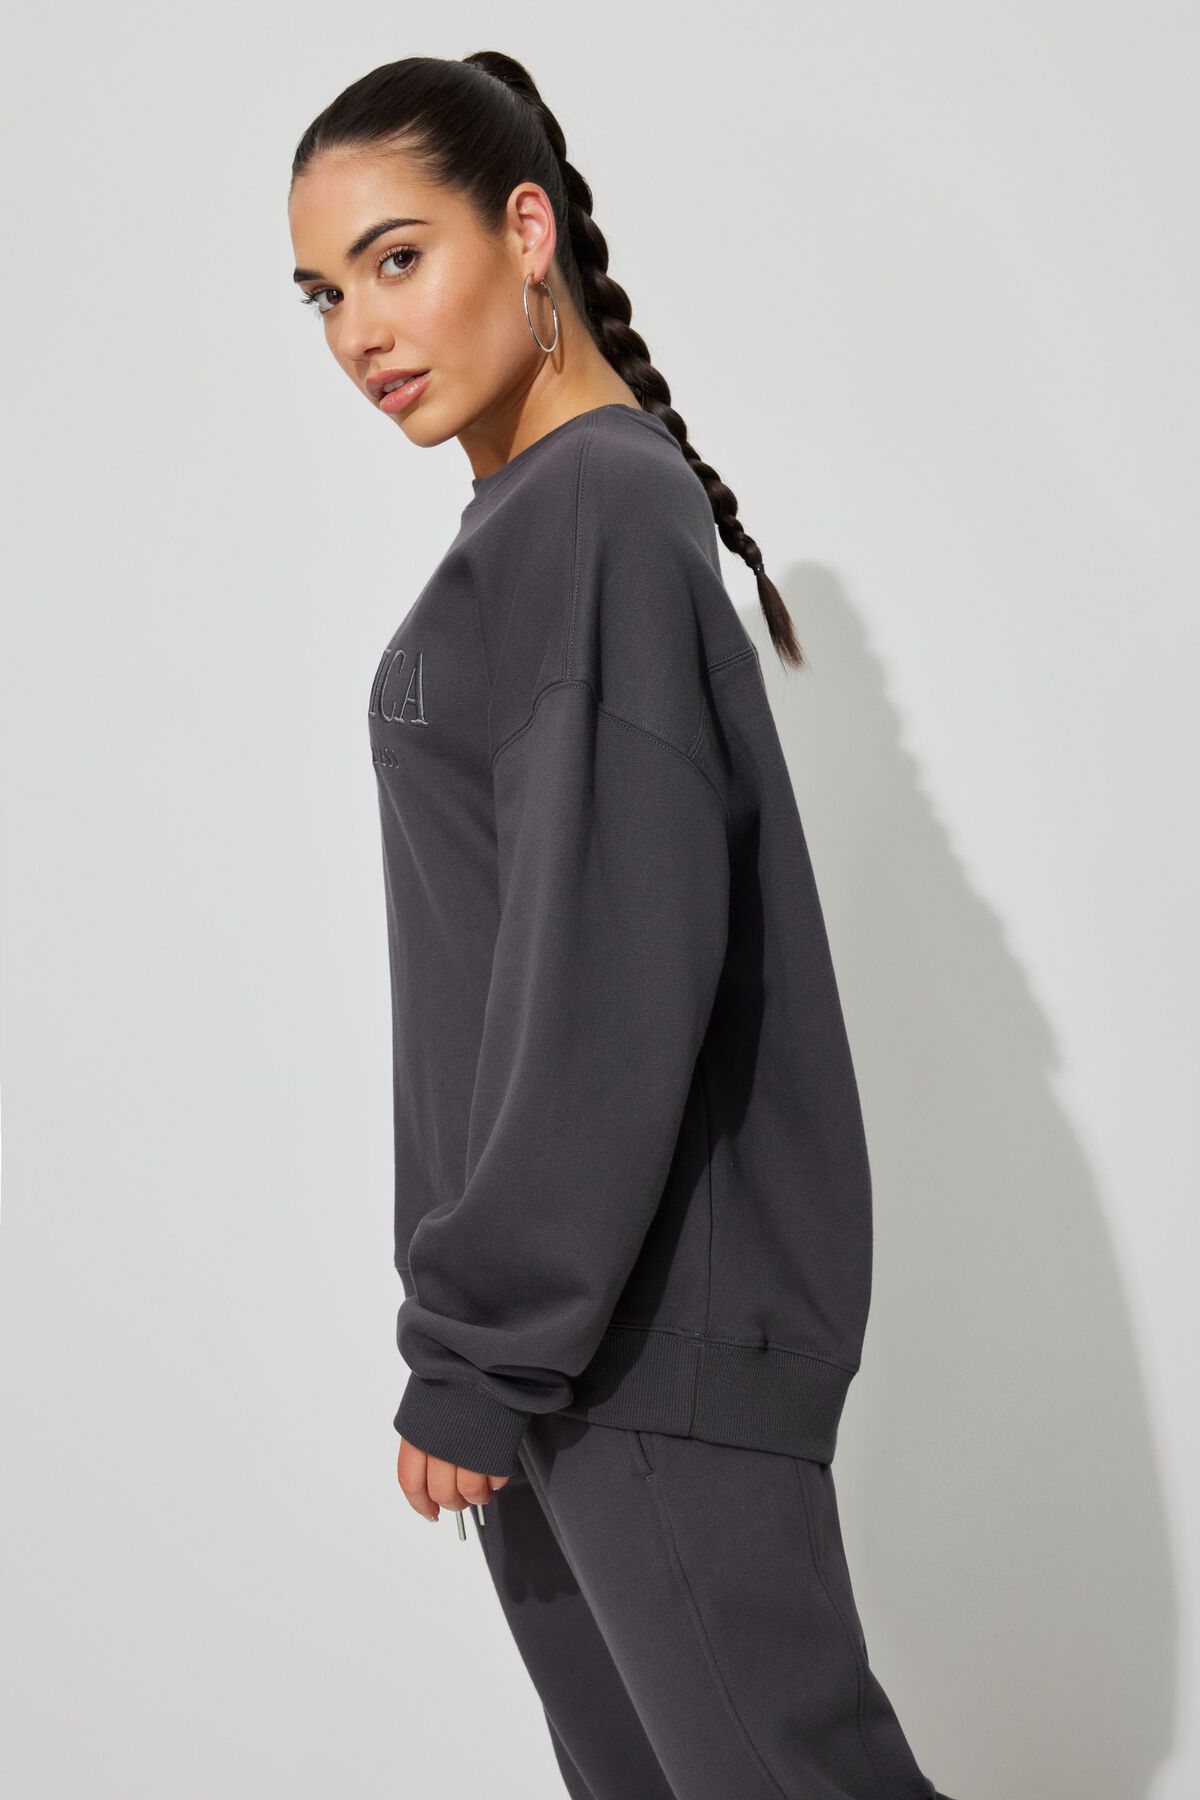 Buy Women Grey Melange Printed SWAGGER Crew W Sweatshirt XL Online